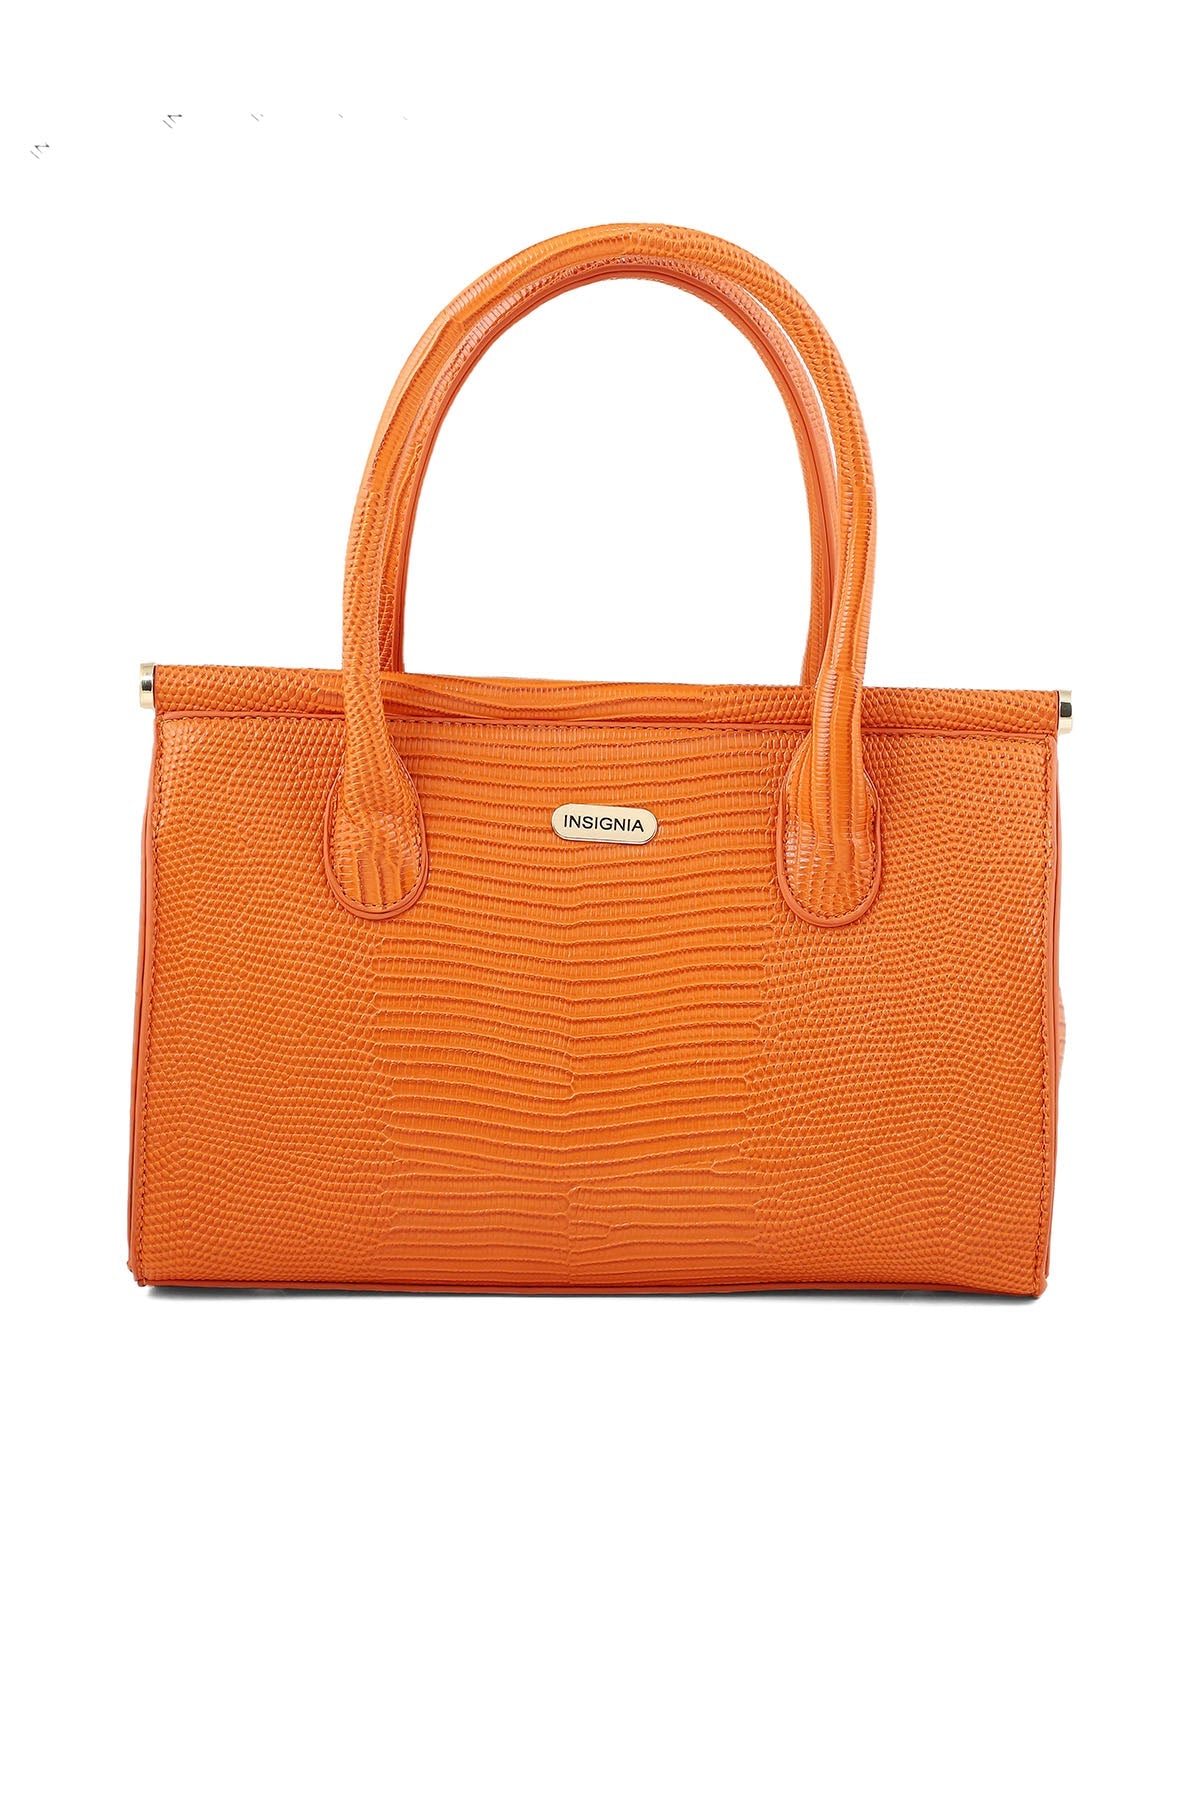 Casual Tote Hand Bags B15047-Orange